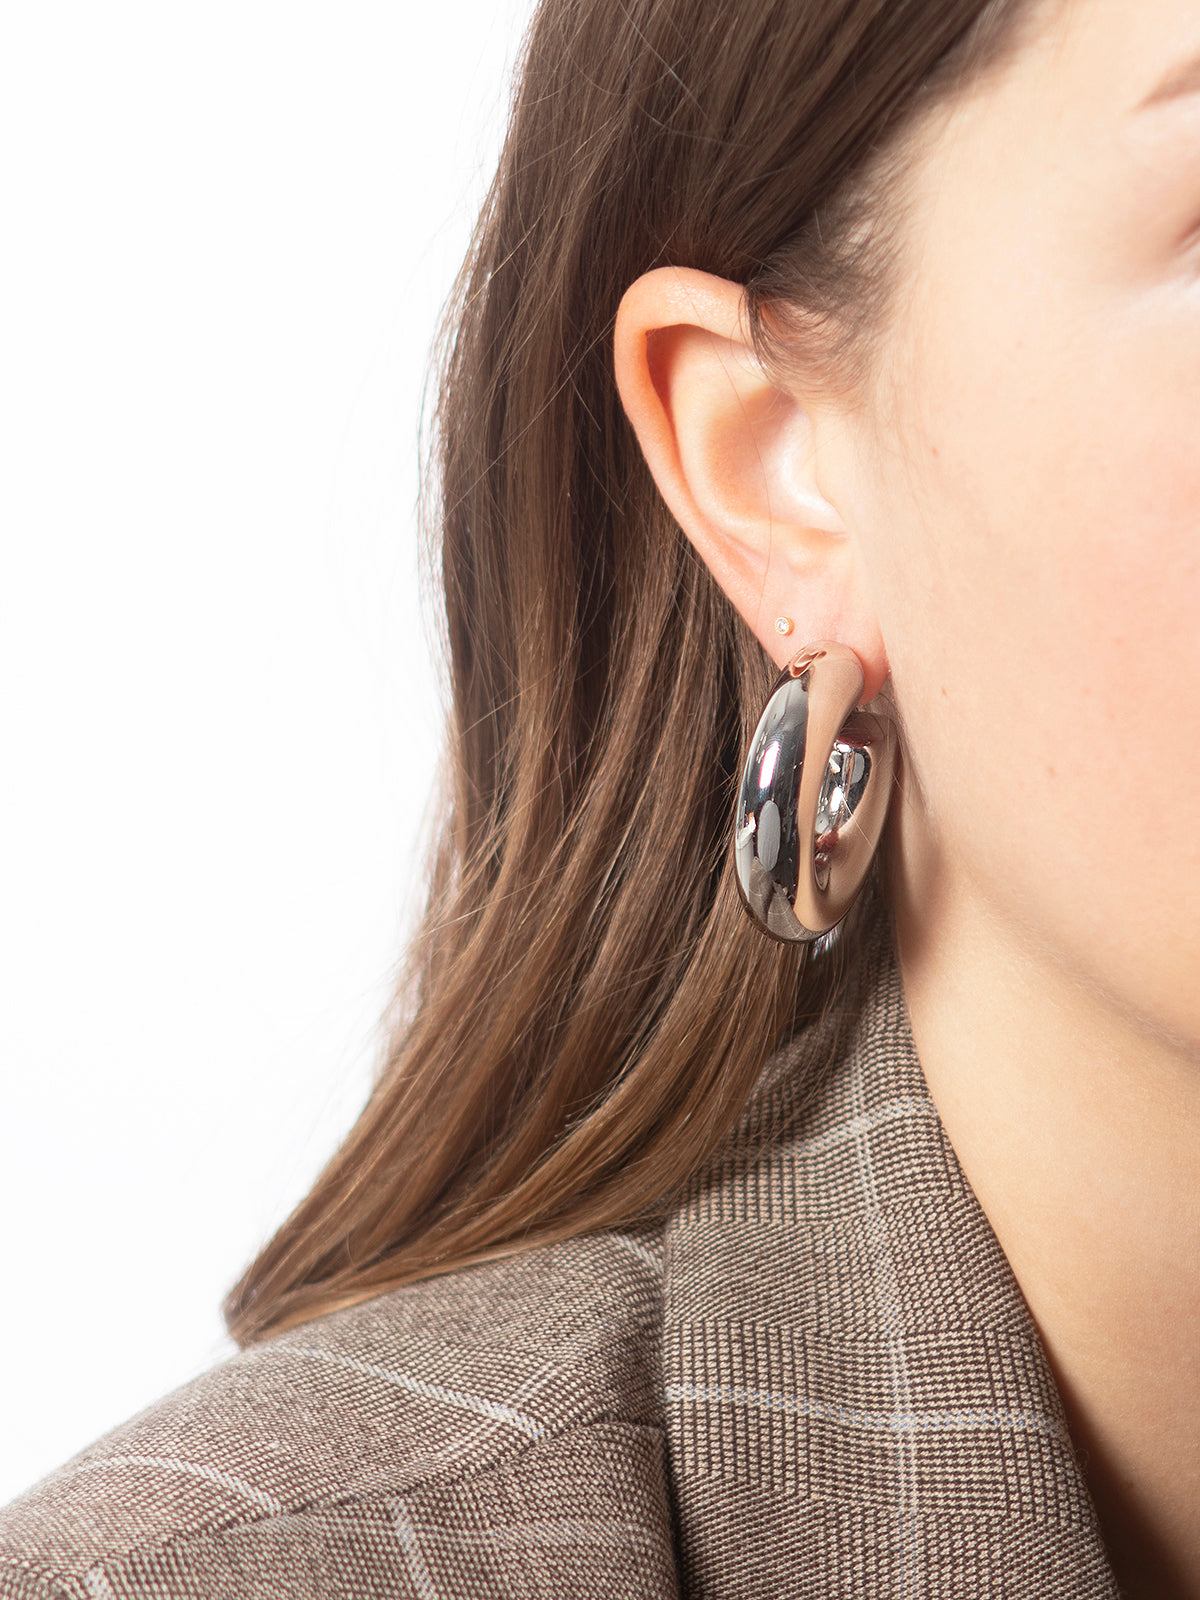 Janis Savitt Medium Hoop Earrings